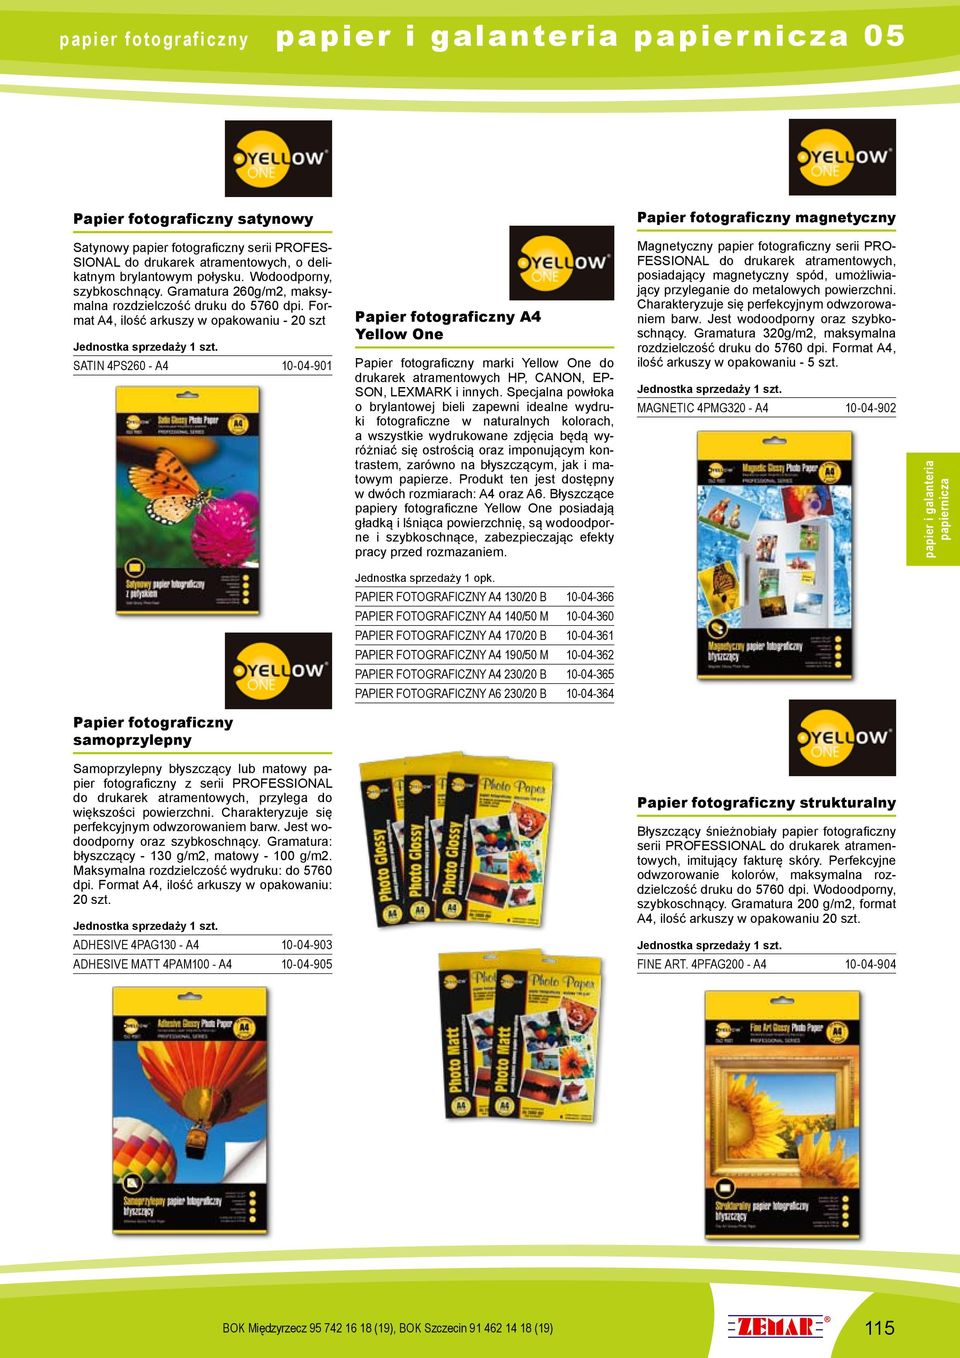 Format A4, ilość arkuszy w opakowaniu - 20 szt SATIN 4PS260 - A4 10-04-901 Papier fotograficzny A4 Yellow One Papier fotograficzny marki Yellow One do drukarek atramentowych HP, CANON, EP- SON,